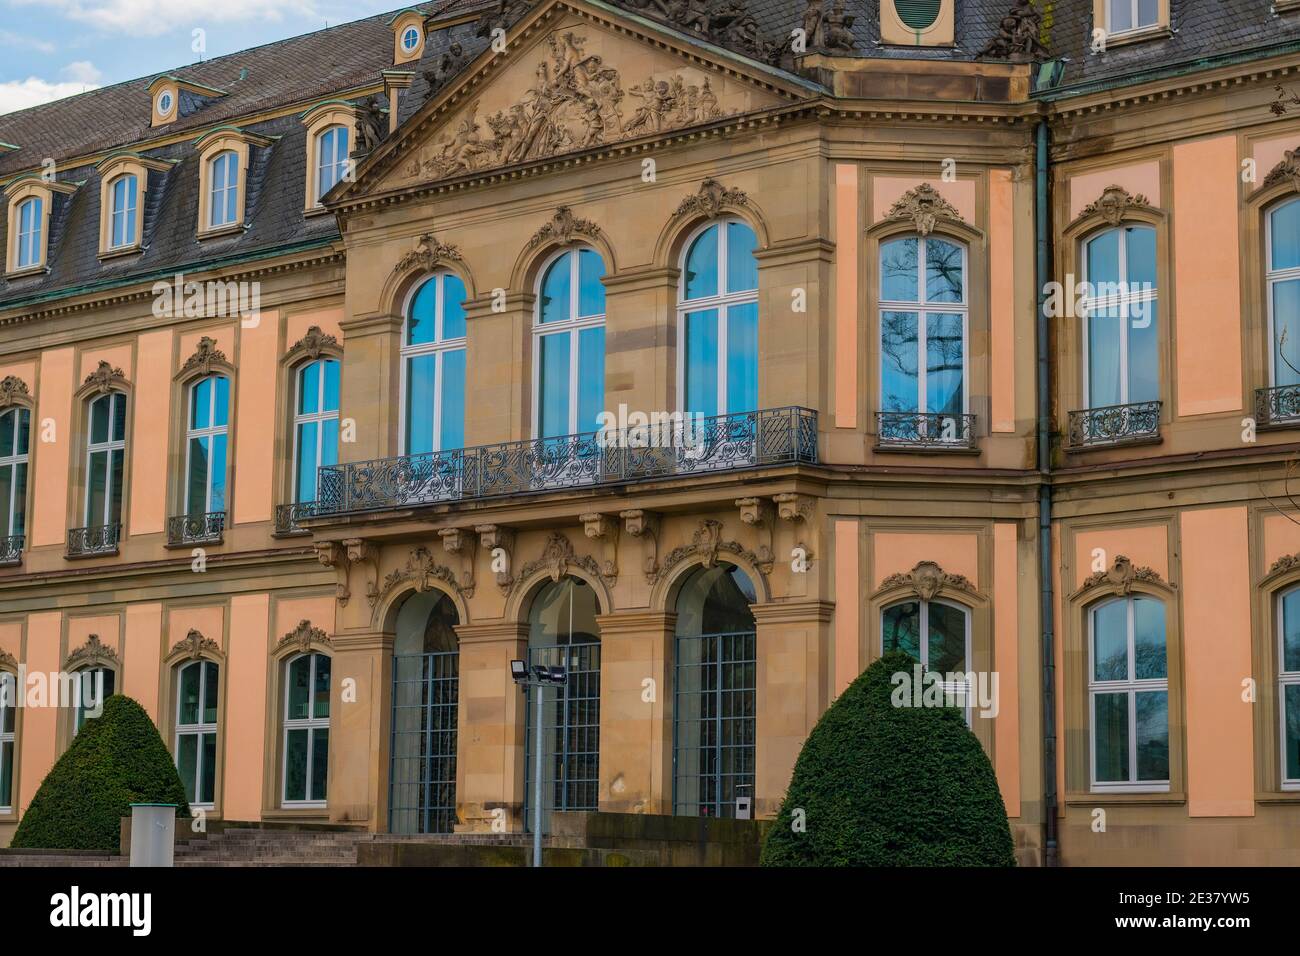 7 March 2020, Stuttgart, Germany - New Castle (Neues Schloss) on Caste Square (Schlossplatz),18th-century Baroque palace Stock Photo